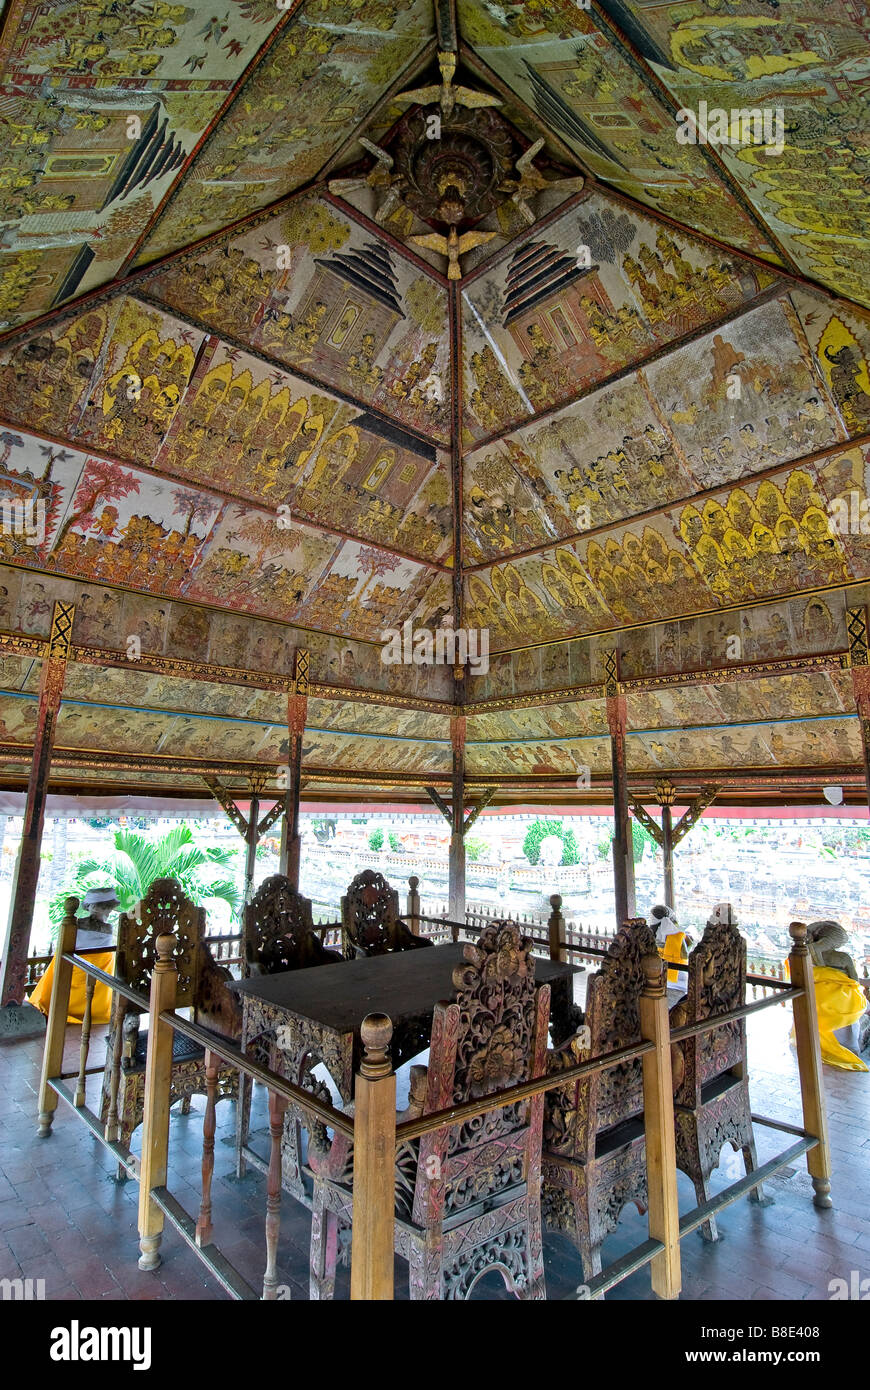 Artistic interior of Kerta Gosa Stock Photo